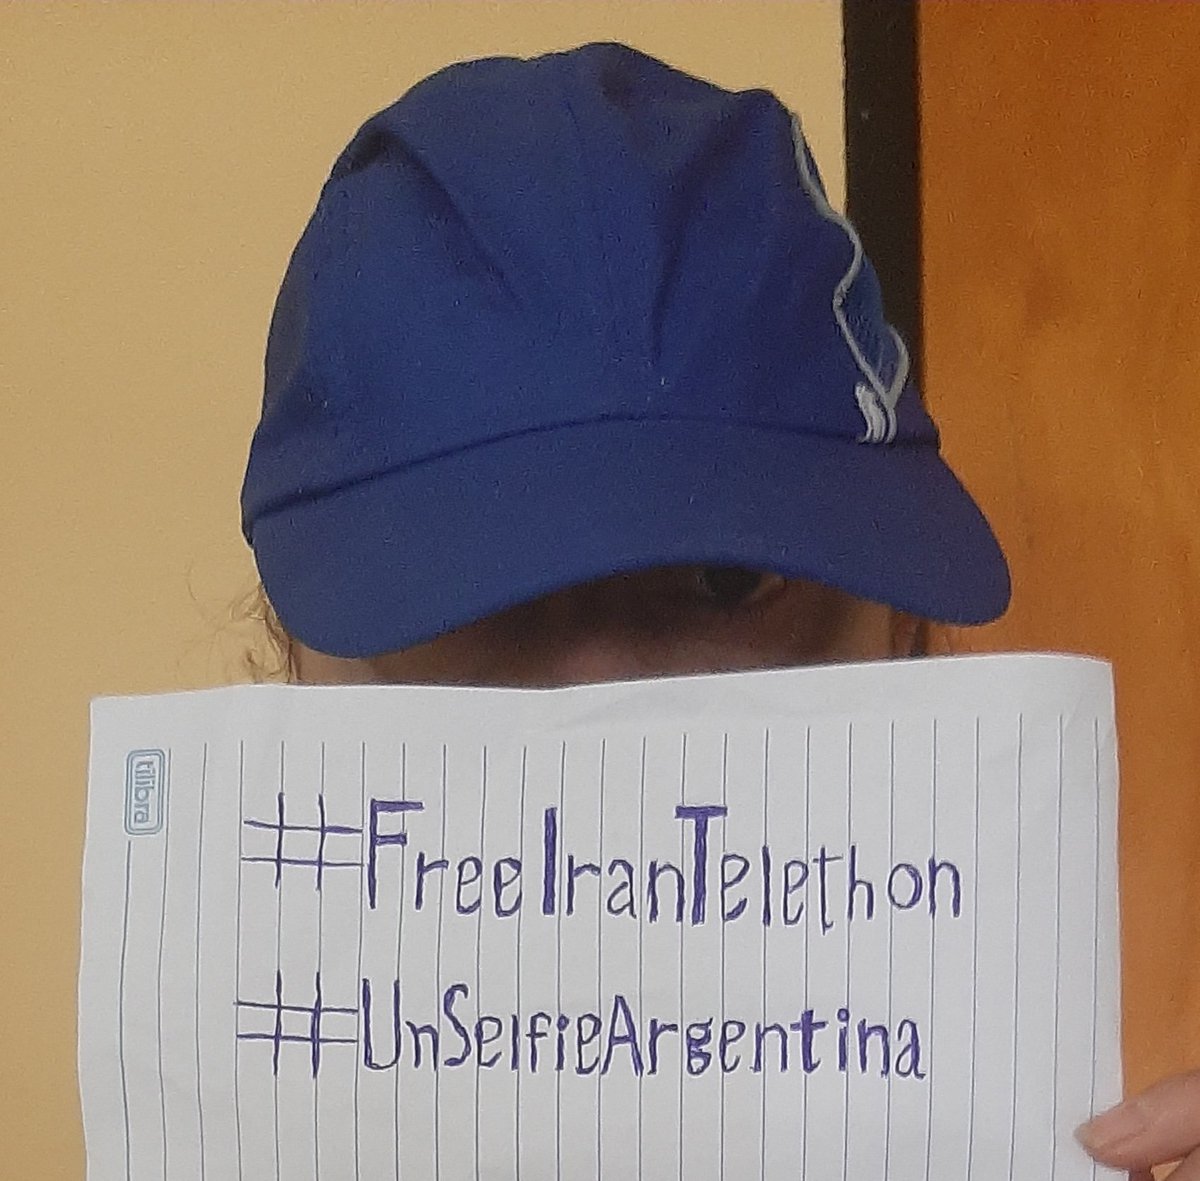 #FreeIranTelethon 
#UnSelfie #Argentina 
@Neda100Liberty